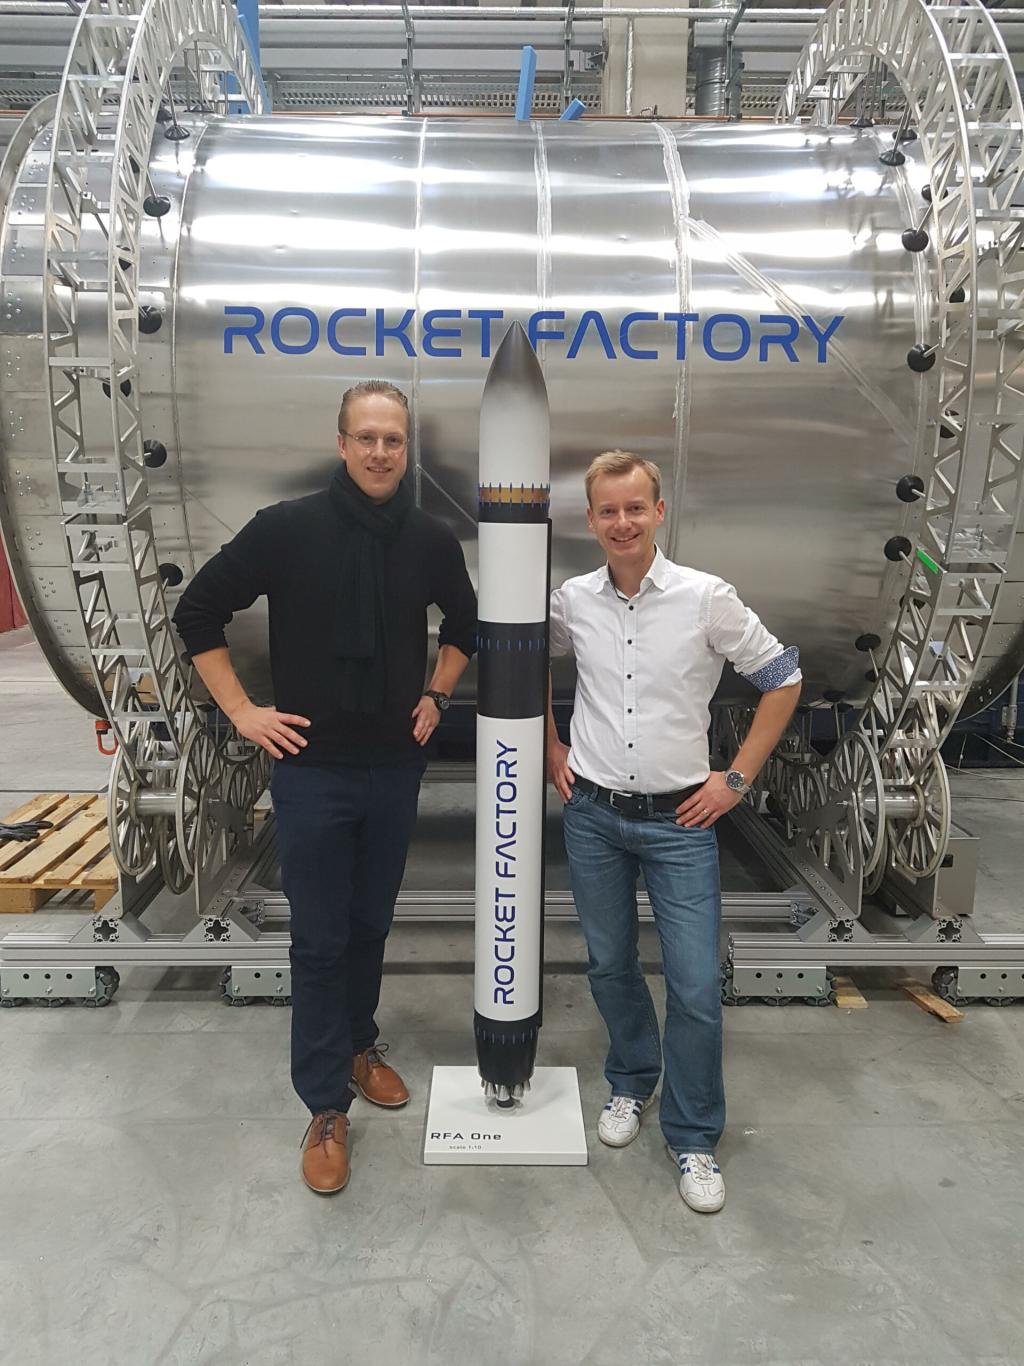 Rocket Factory is looking for investors